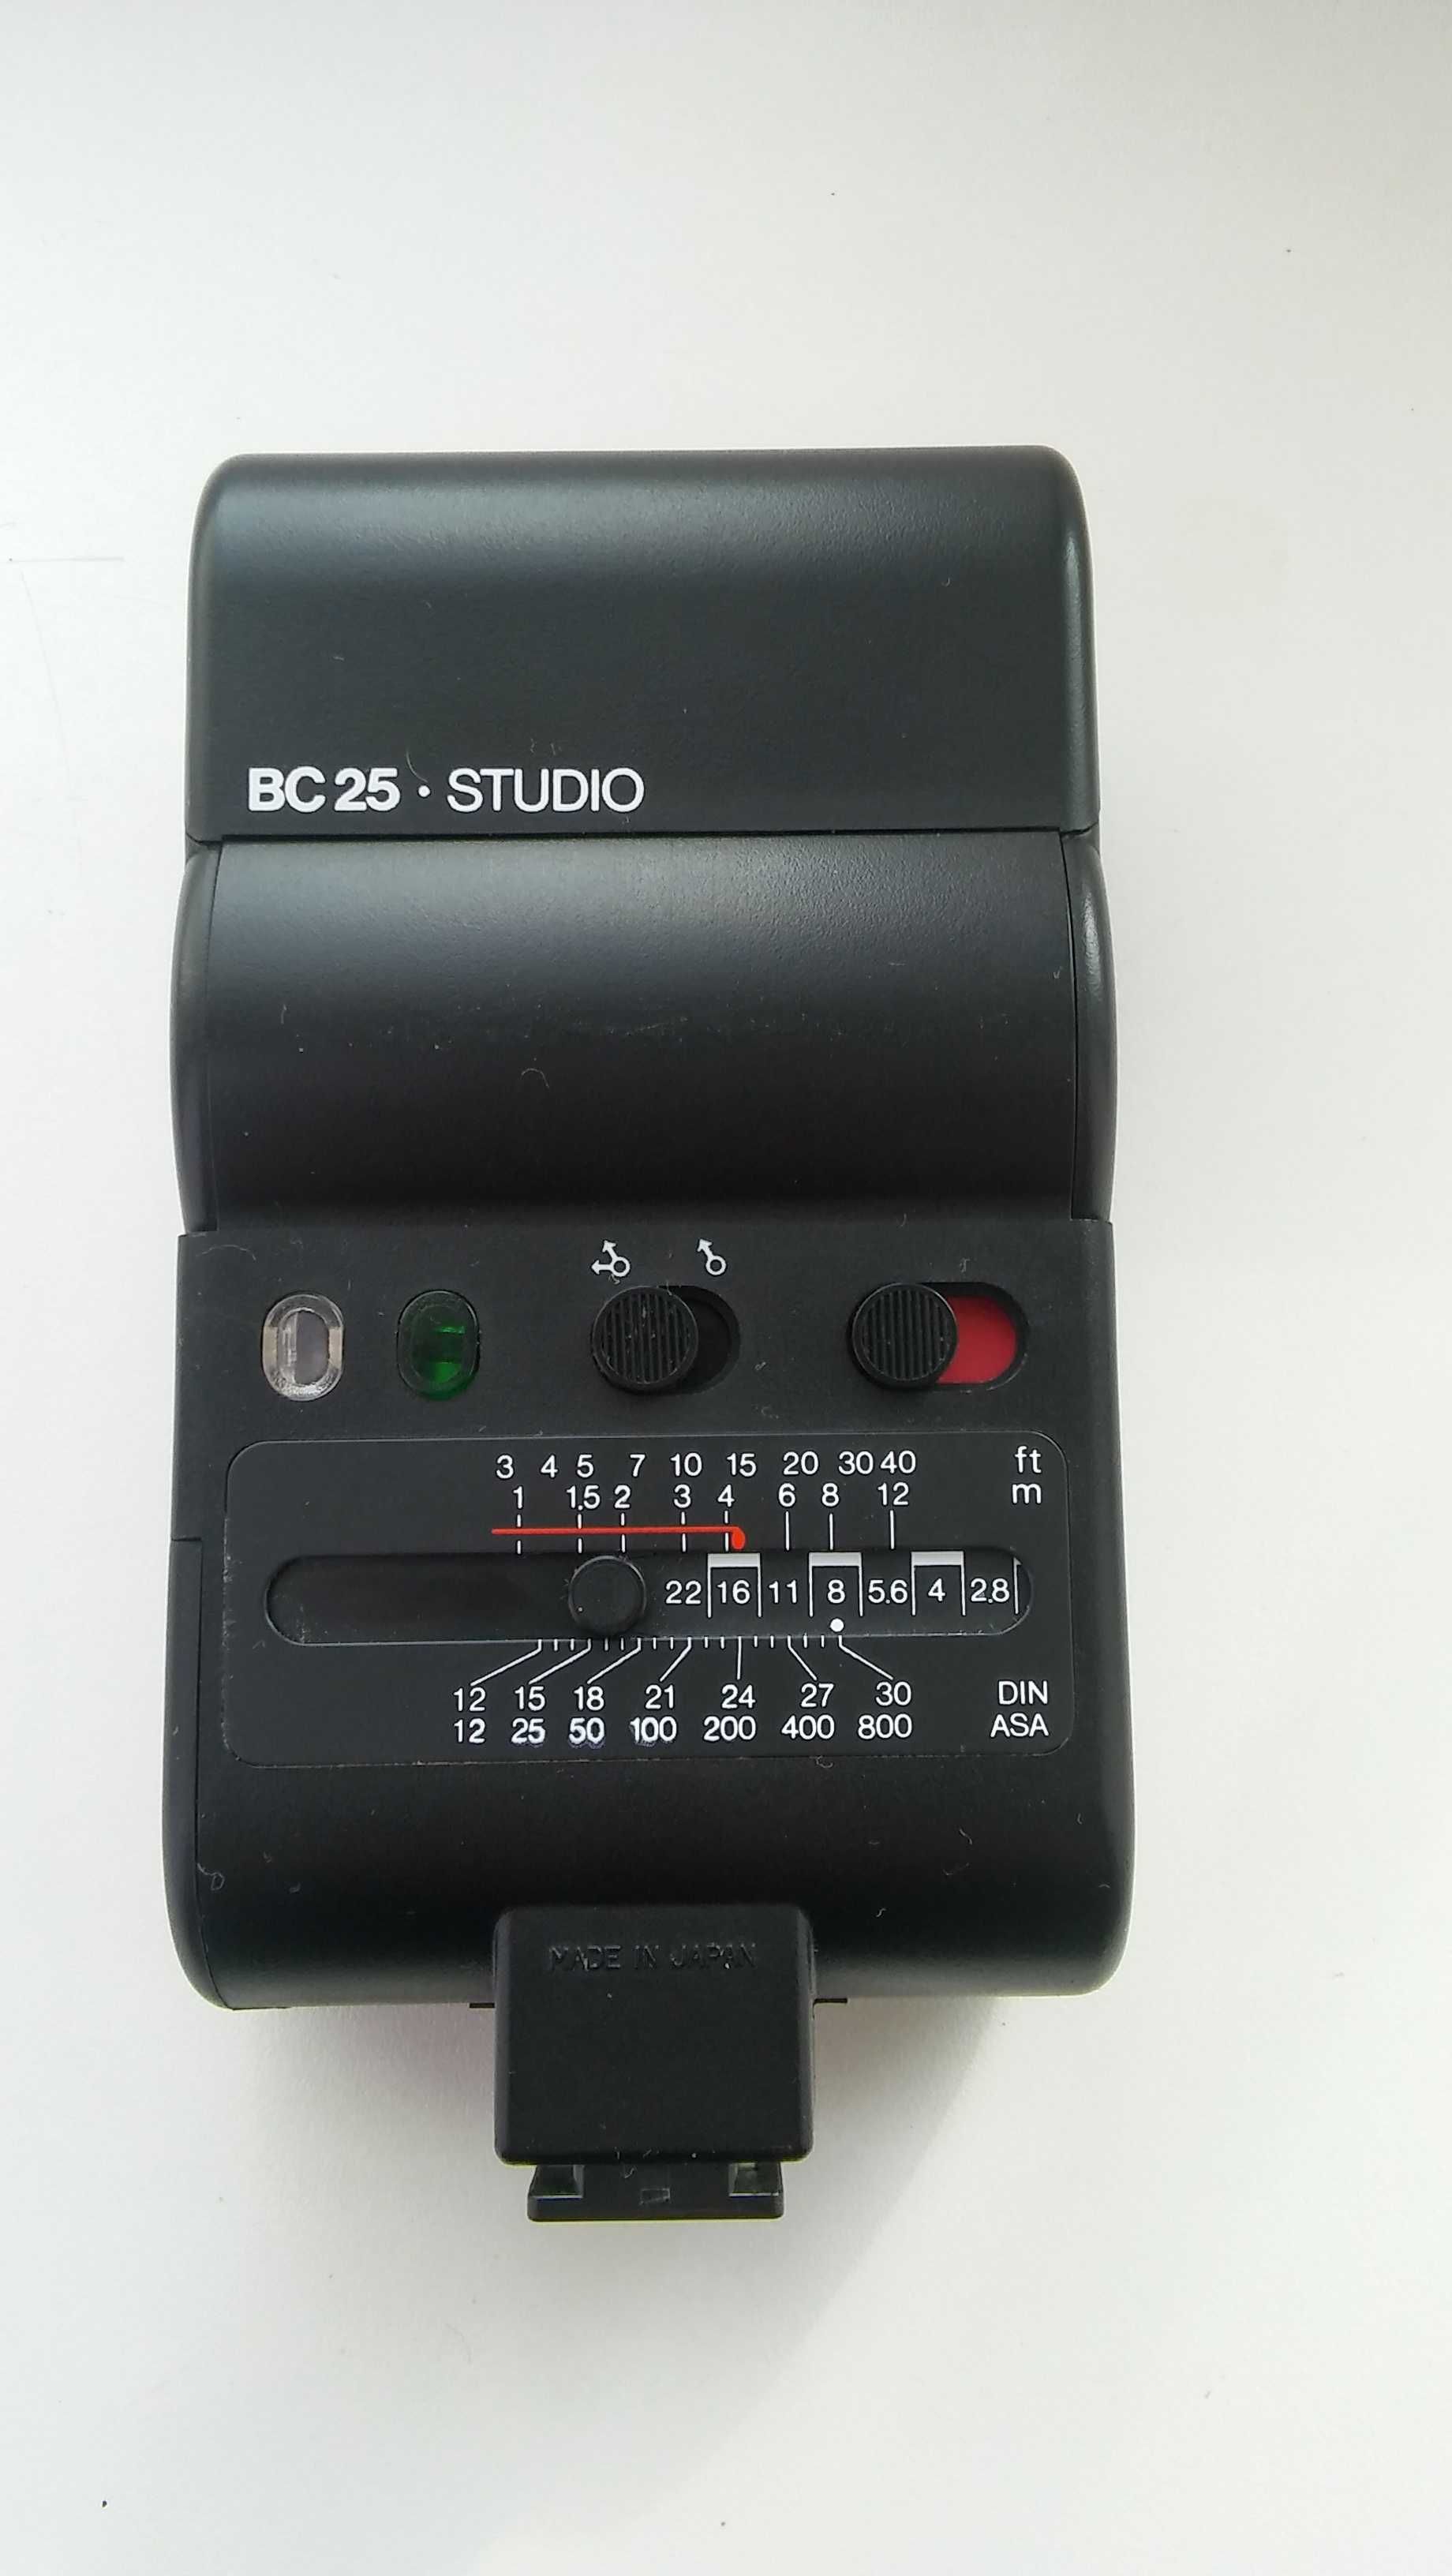 OSRAM BC 25 studio-electronic flash device